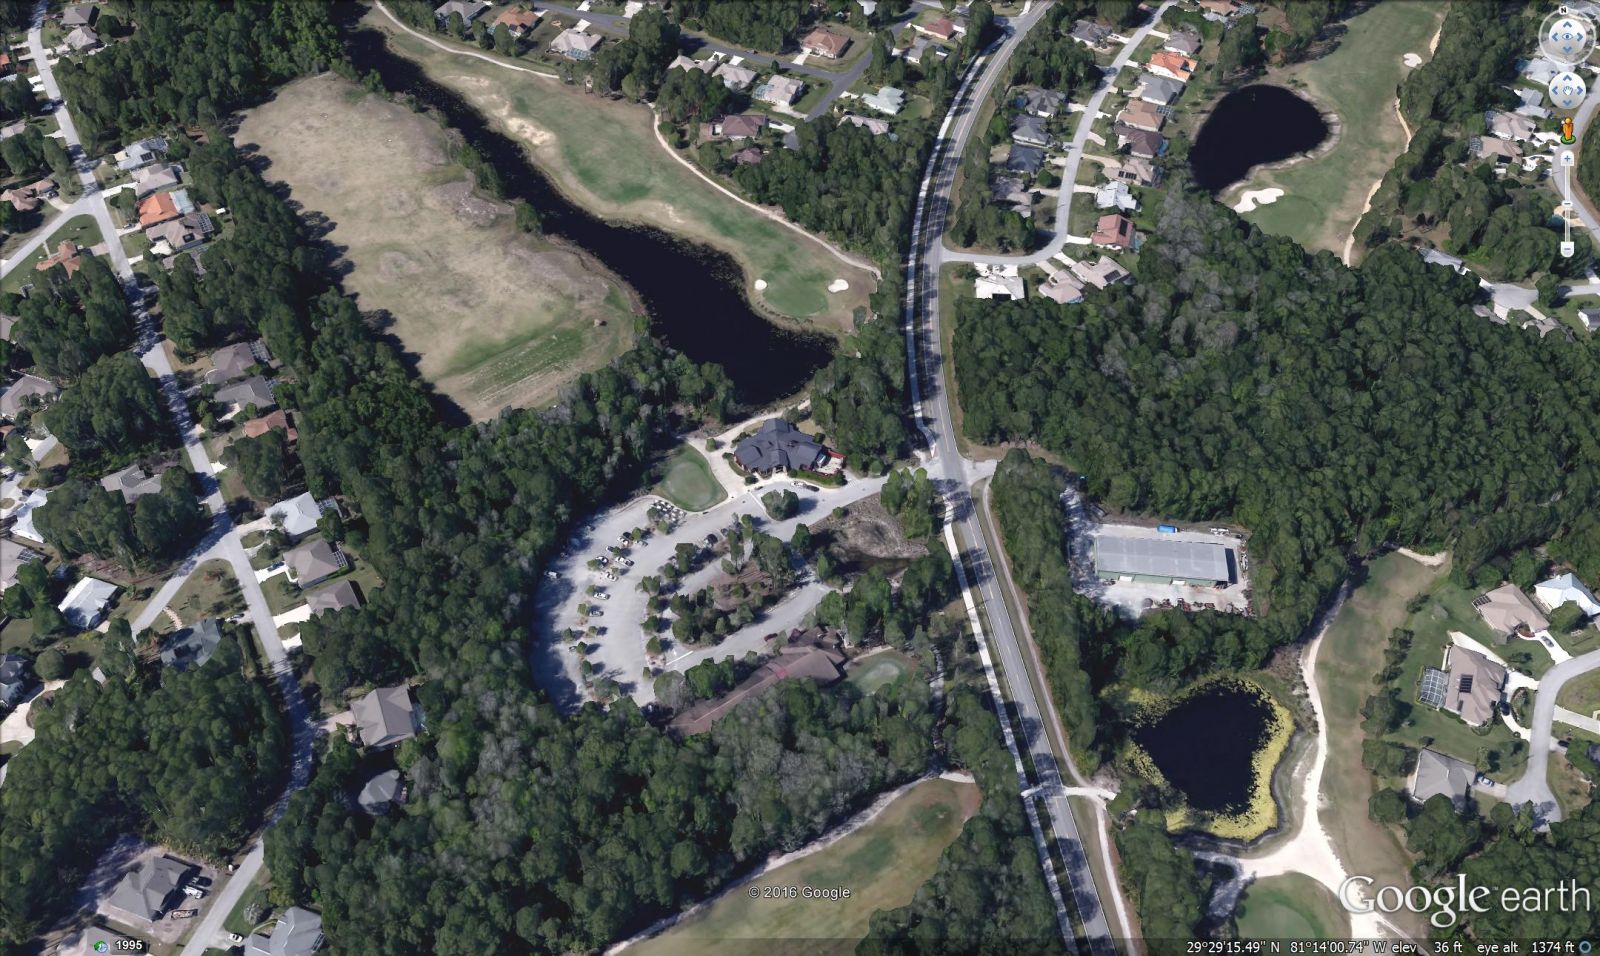 Cypress Knolls Golf Course - Google Earth